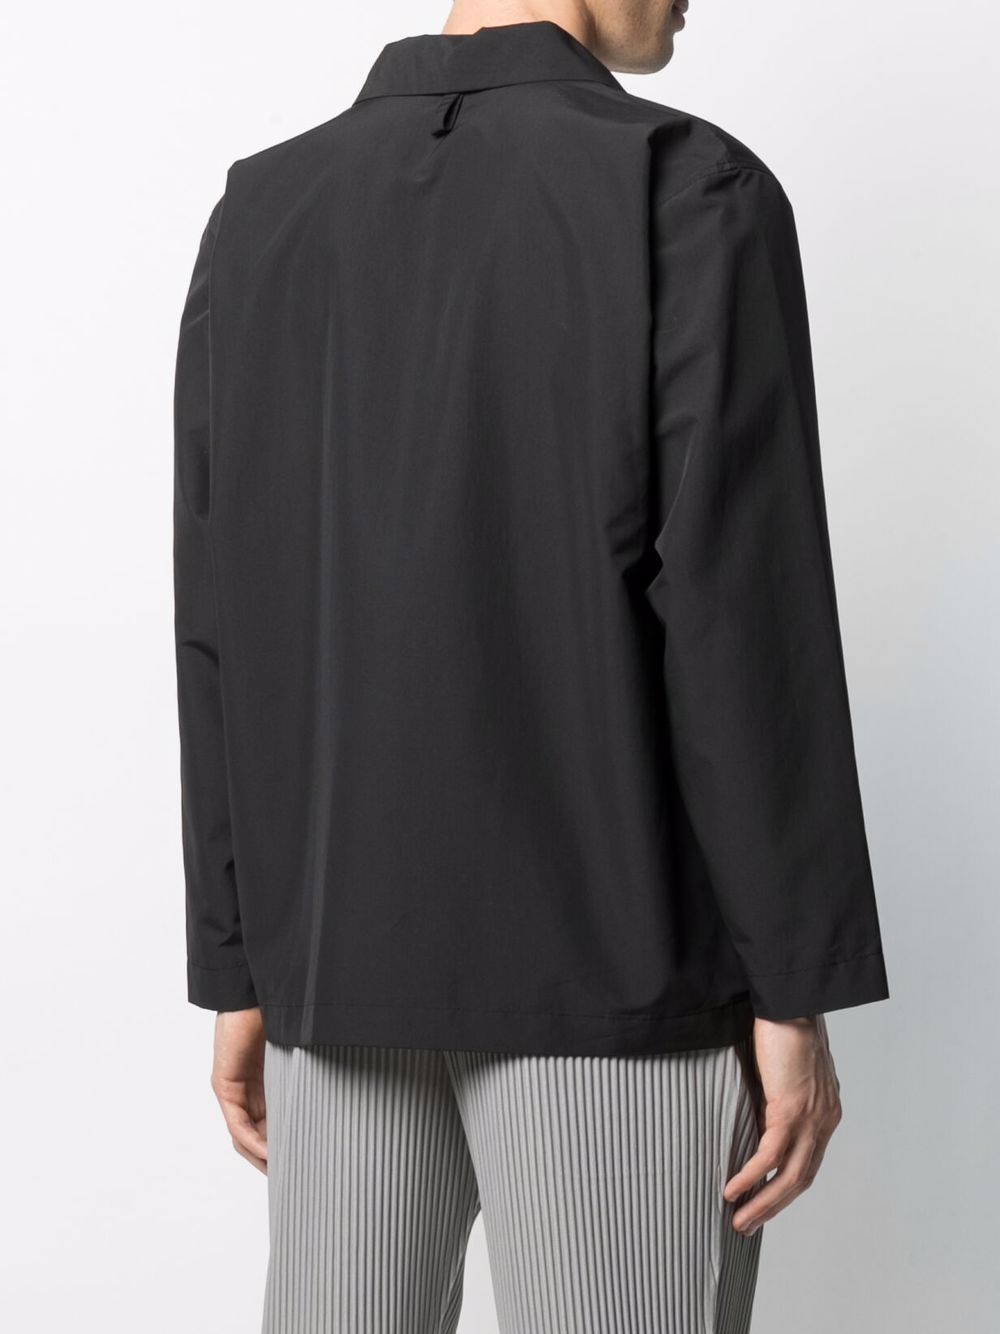 фото Homme plissé issey miyake куртка-рубашка с распашным воротником